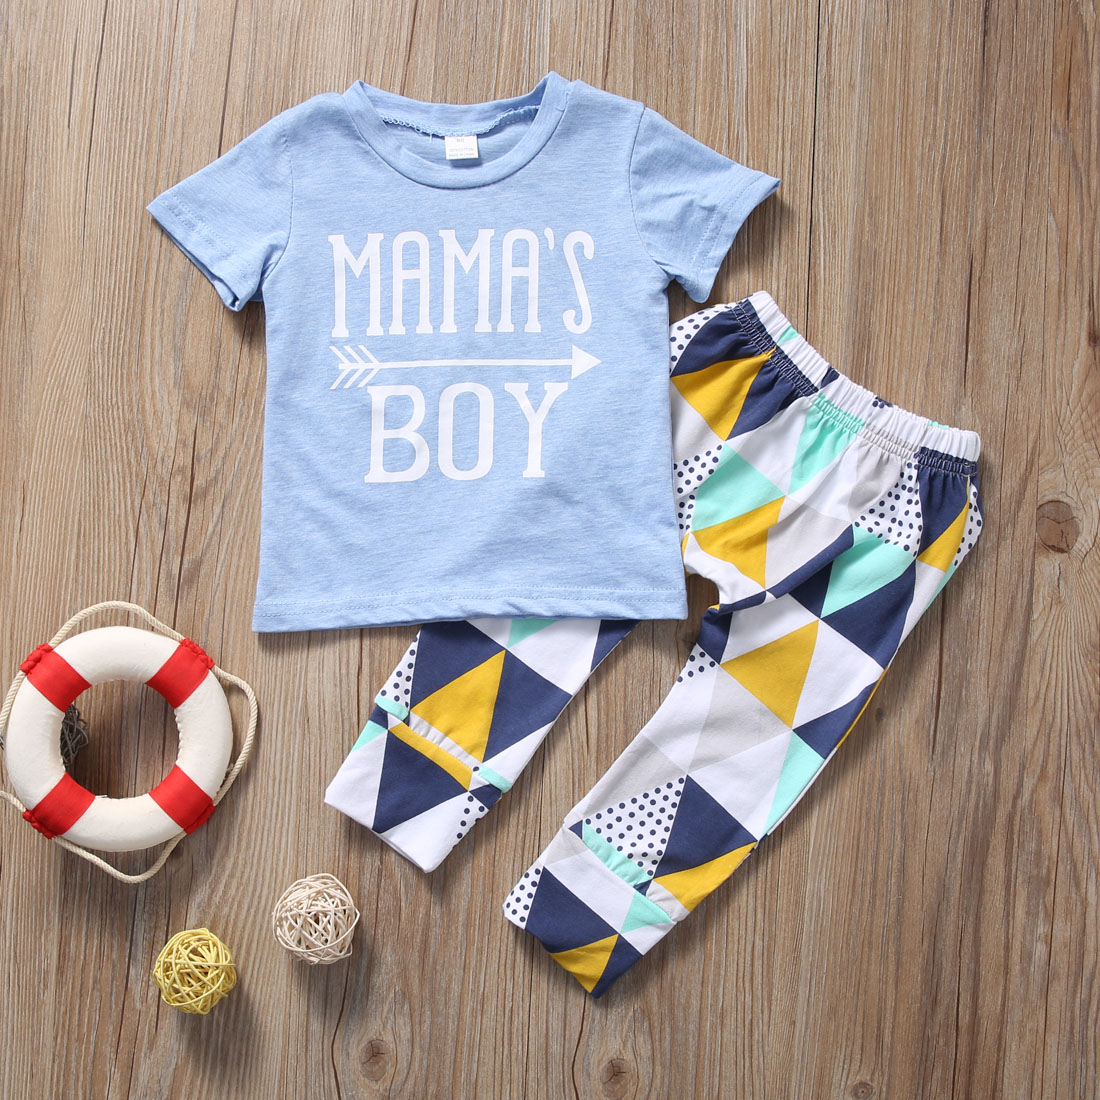 2019 Baby Summer Clothing Newborn Infant Baby Kids Mamas Boy T-shirt Long Pants 2pcs Sets Playsuit Arrow Print Outfits Clothes